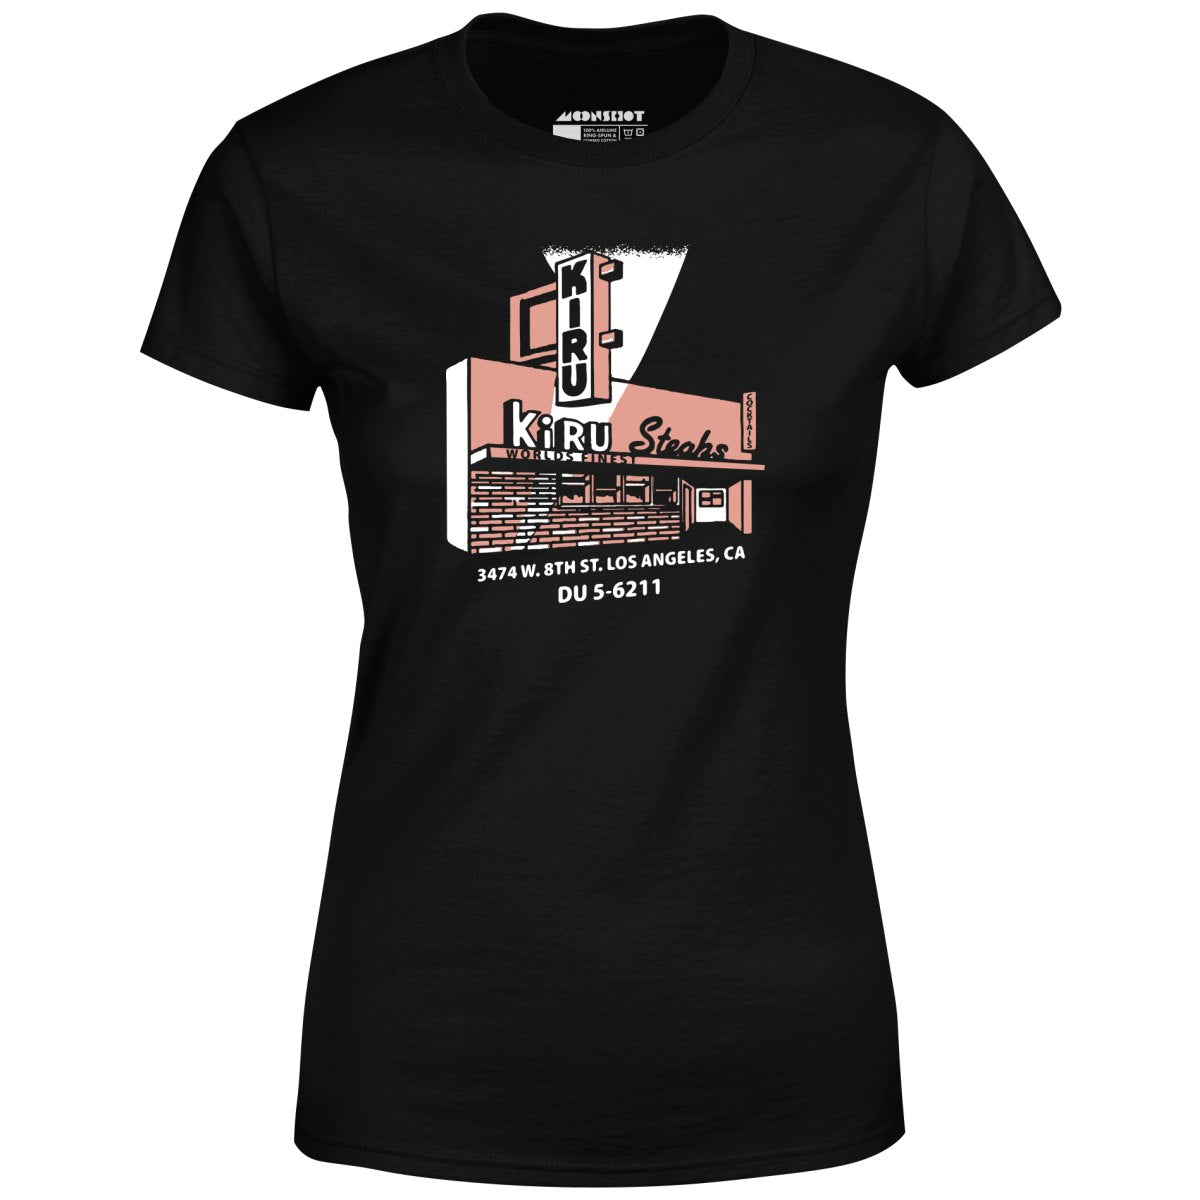 Kiru Steaks - Los Angeles, CA - Vintage Restaurant - Women's T-Shirt